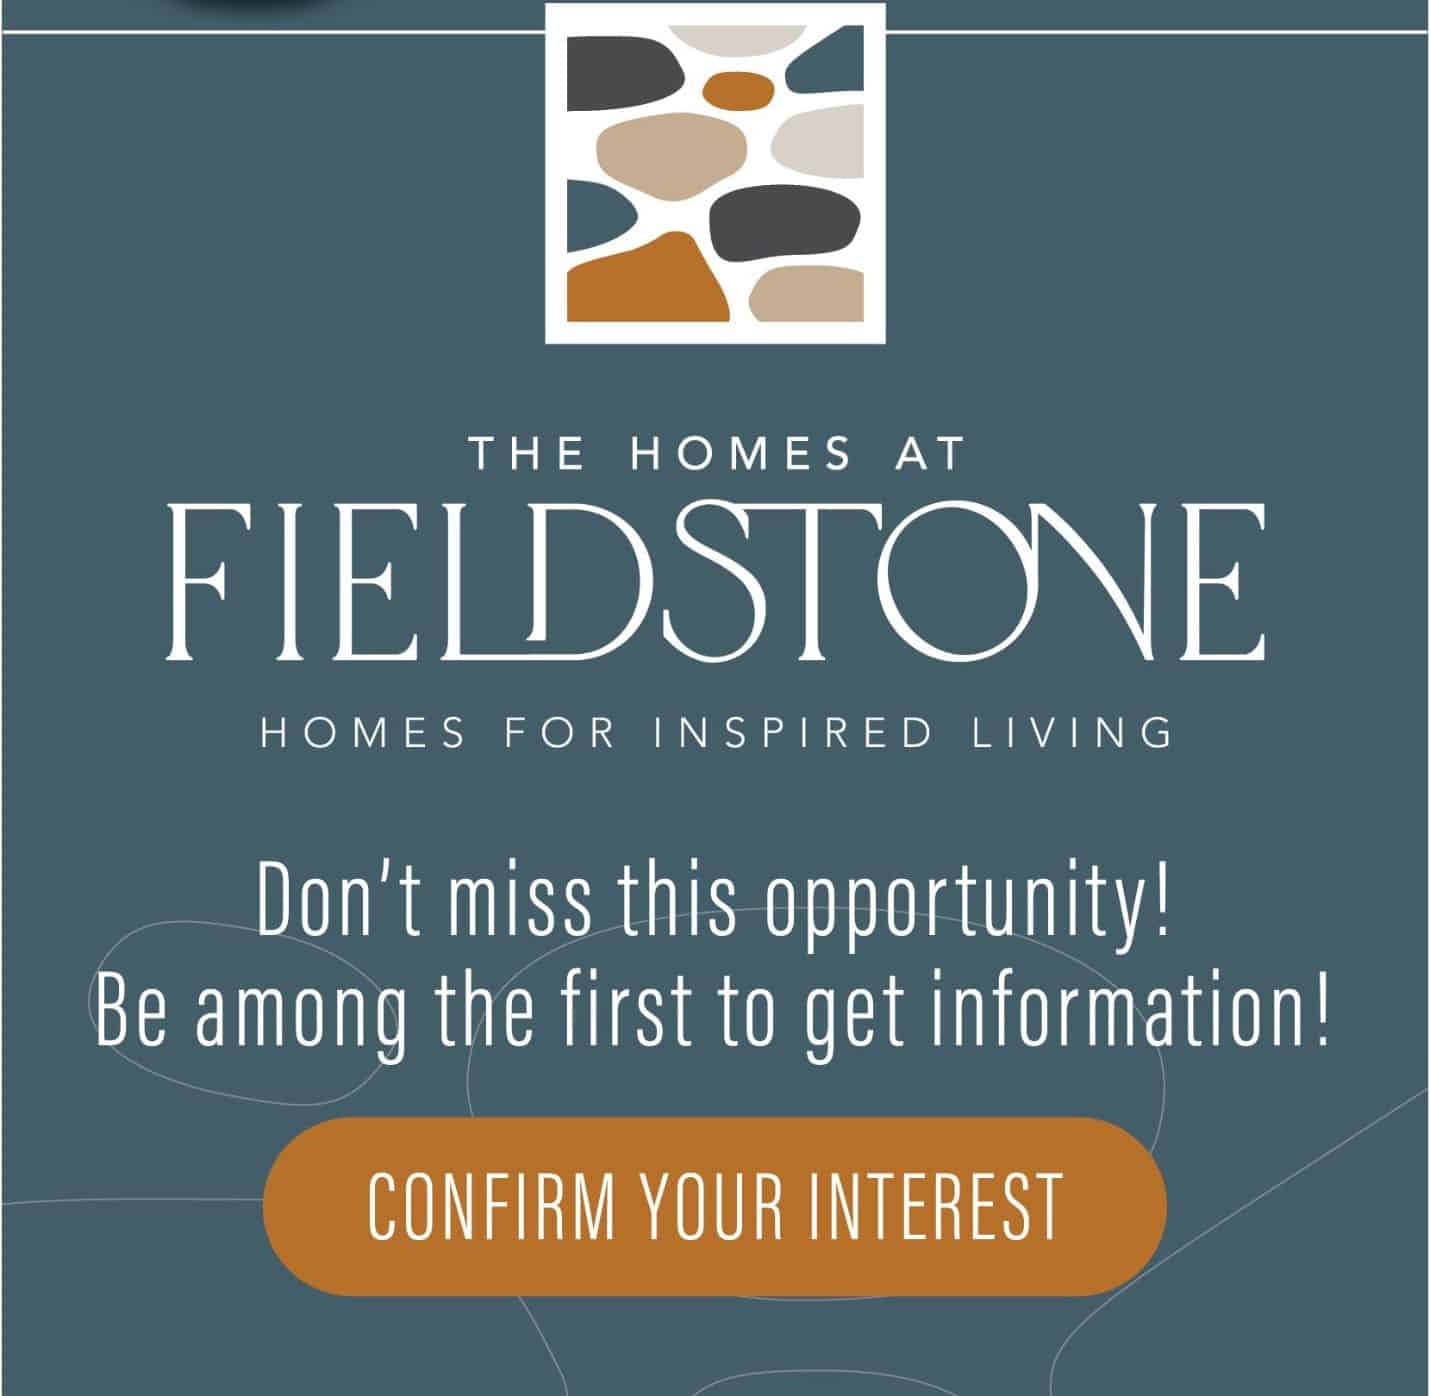 Fieldstone community in Niagara - On Sale Now